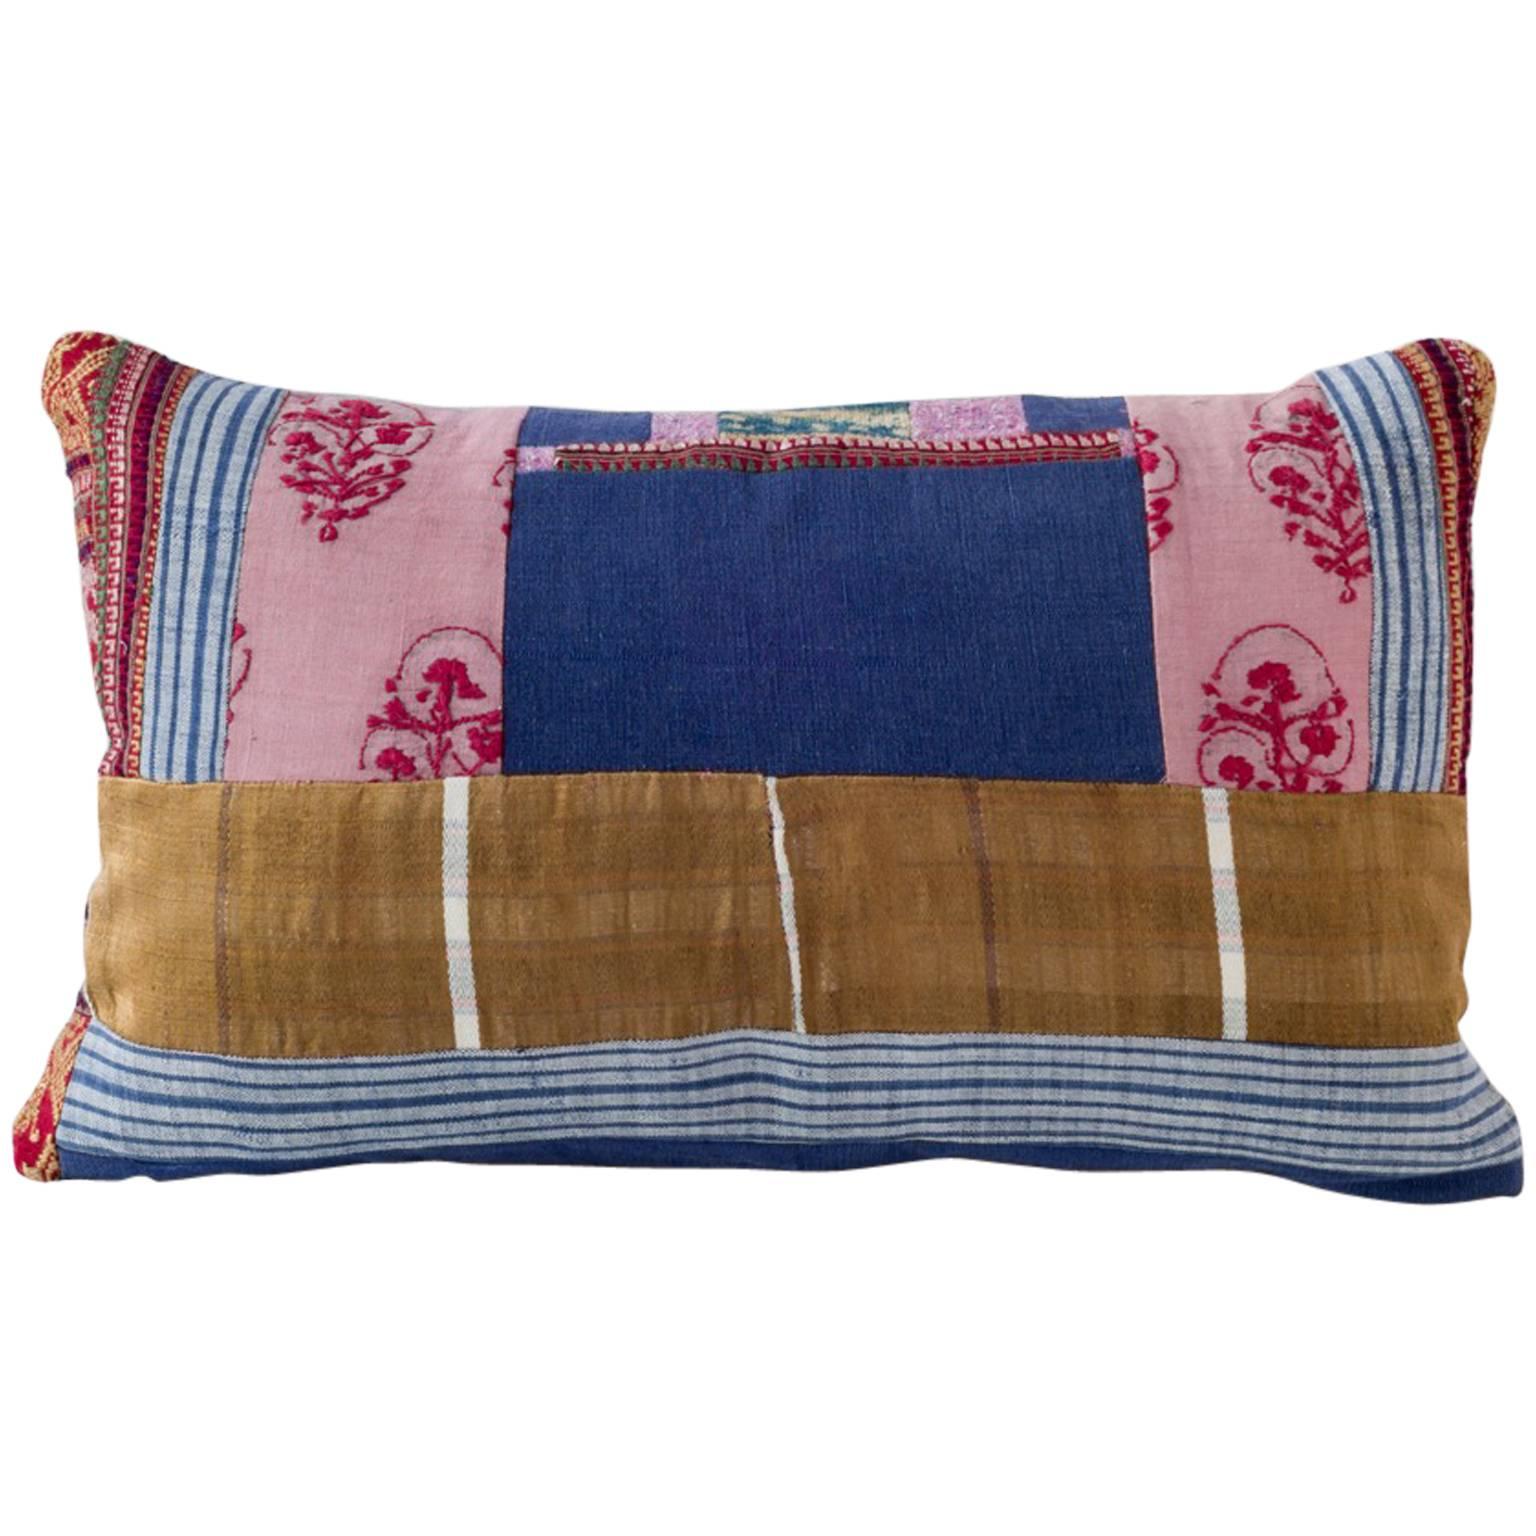 Ethnographic Textile Piecework Lumbar Pillow in Indigo, Gold, Red and Pink